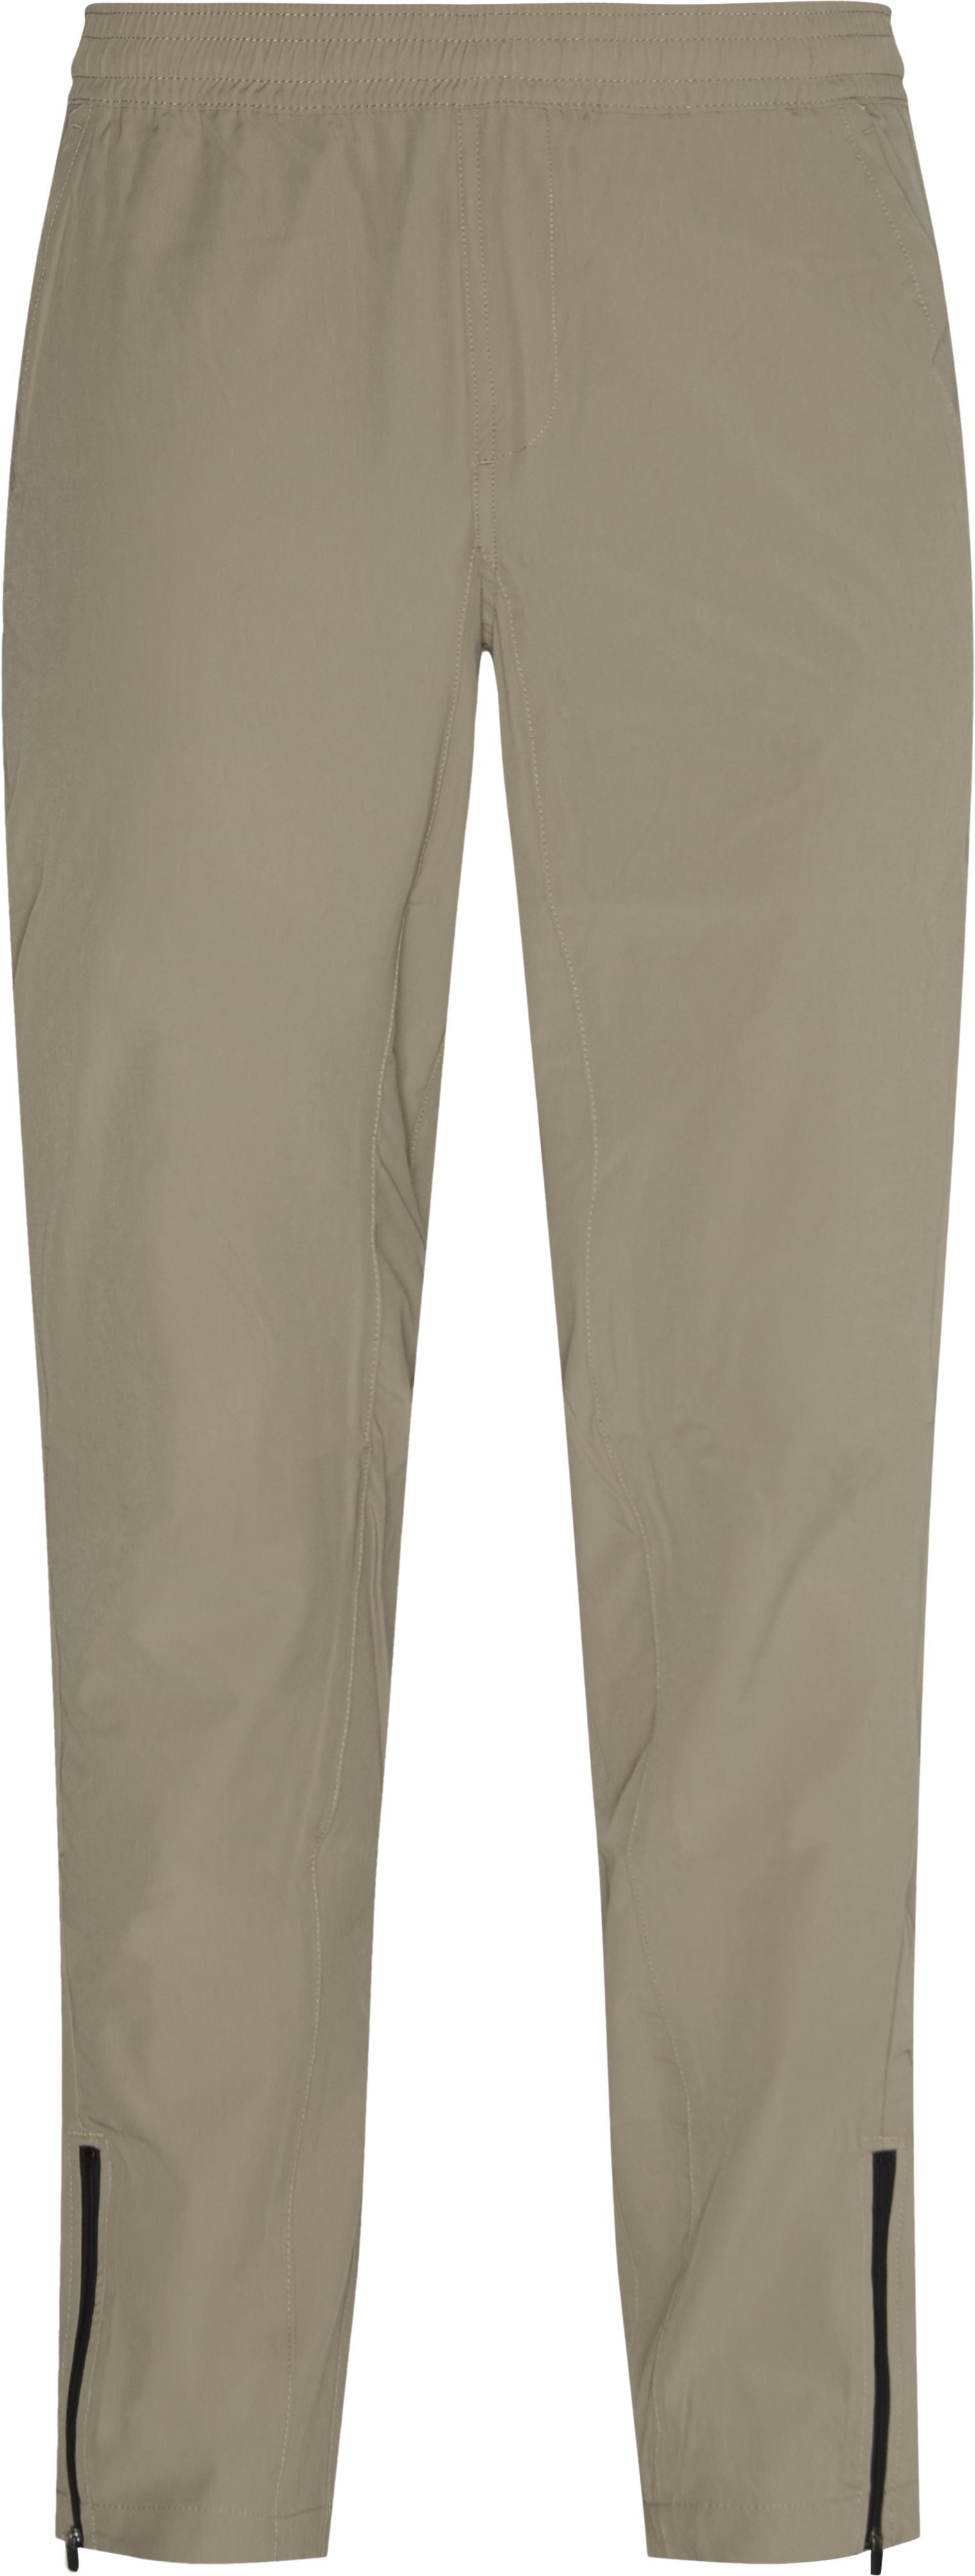 Gretsky Track Pants - Bukser - Tailored fit - Sand